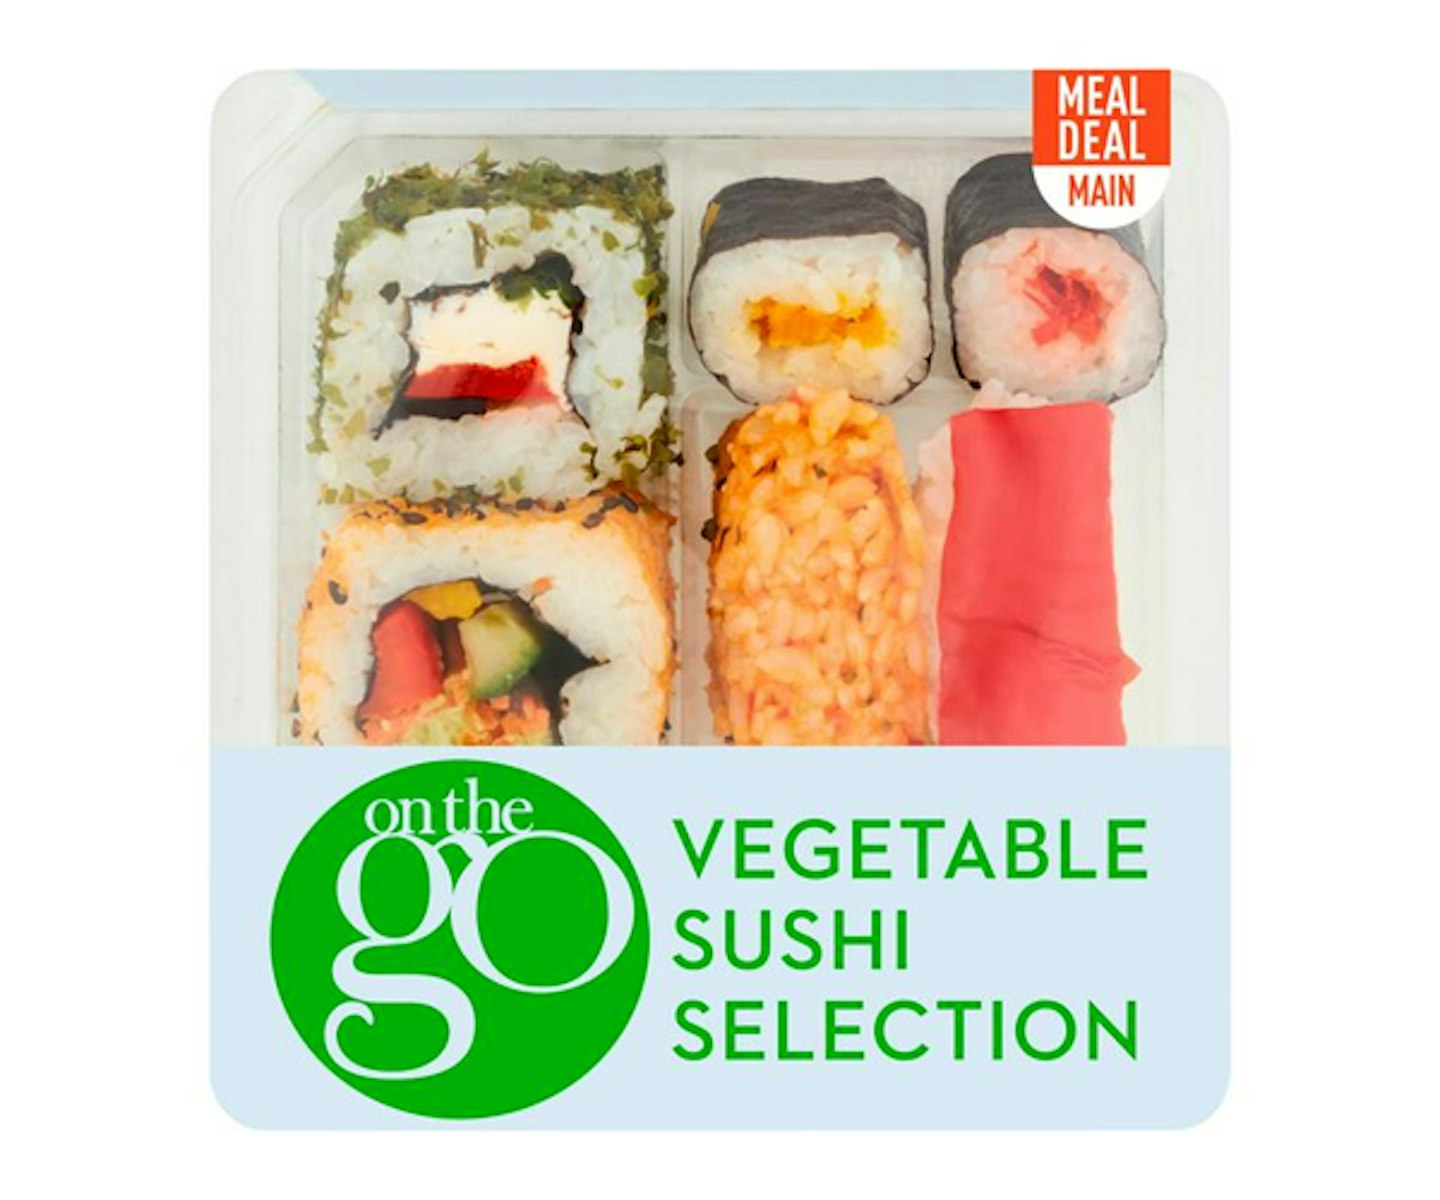 Sainsbury's Vegetable Sushi Medium 148g